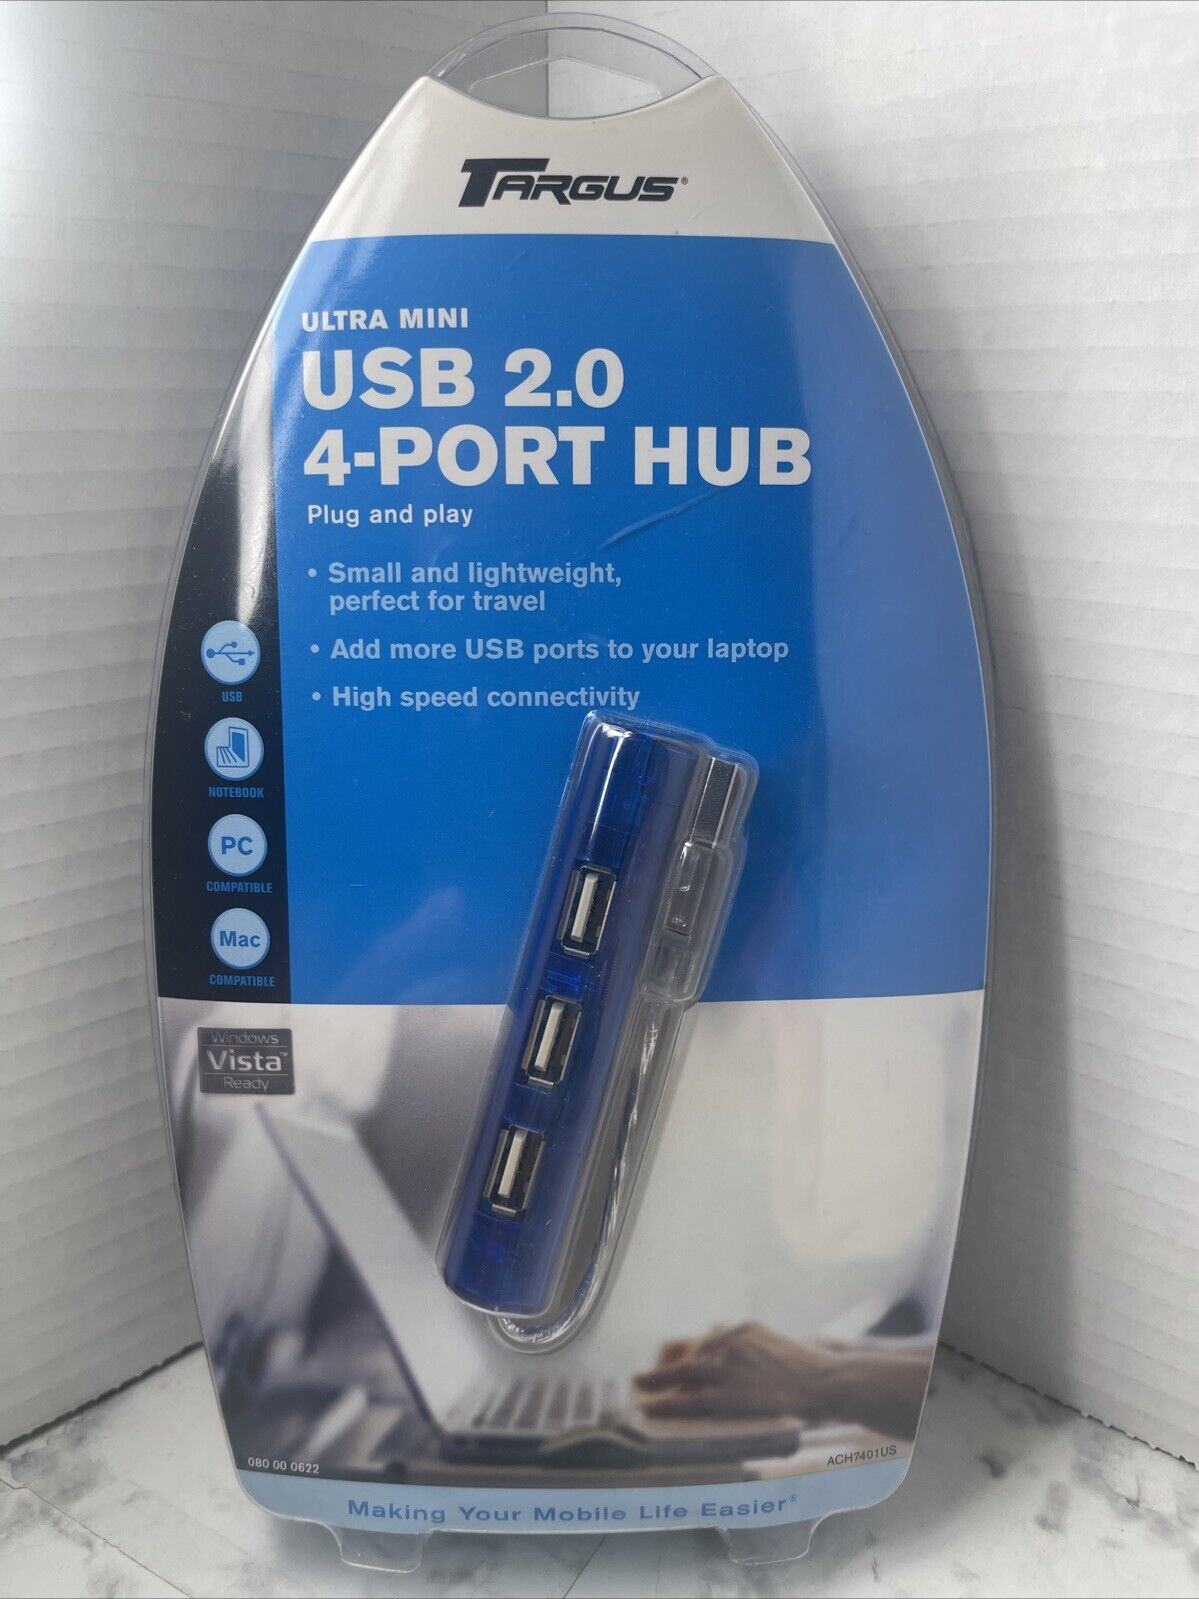 TARGUS Ultra Mini USB 2.0 4-PORT HUB Plug and Play NEW for PC NOTEBOOK MAC